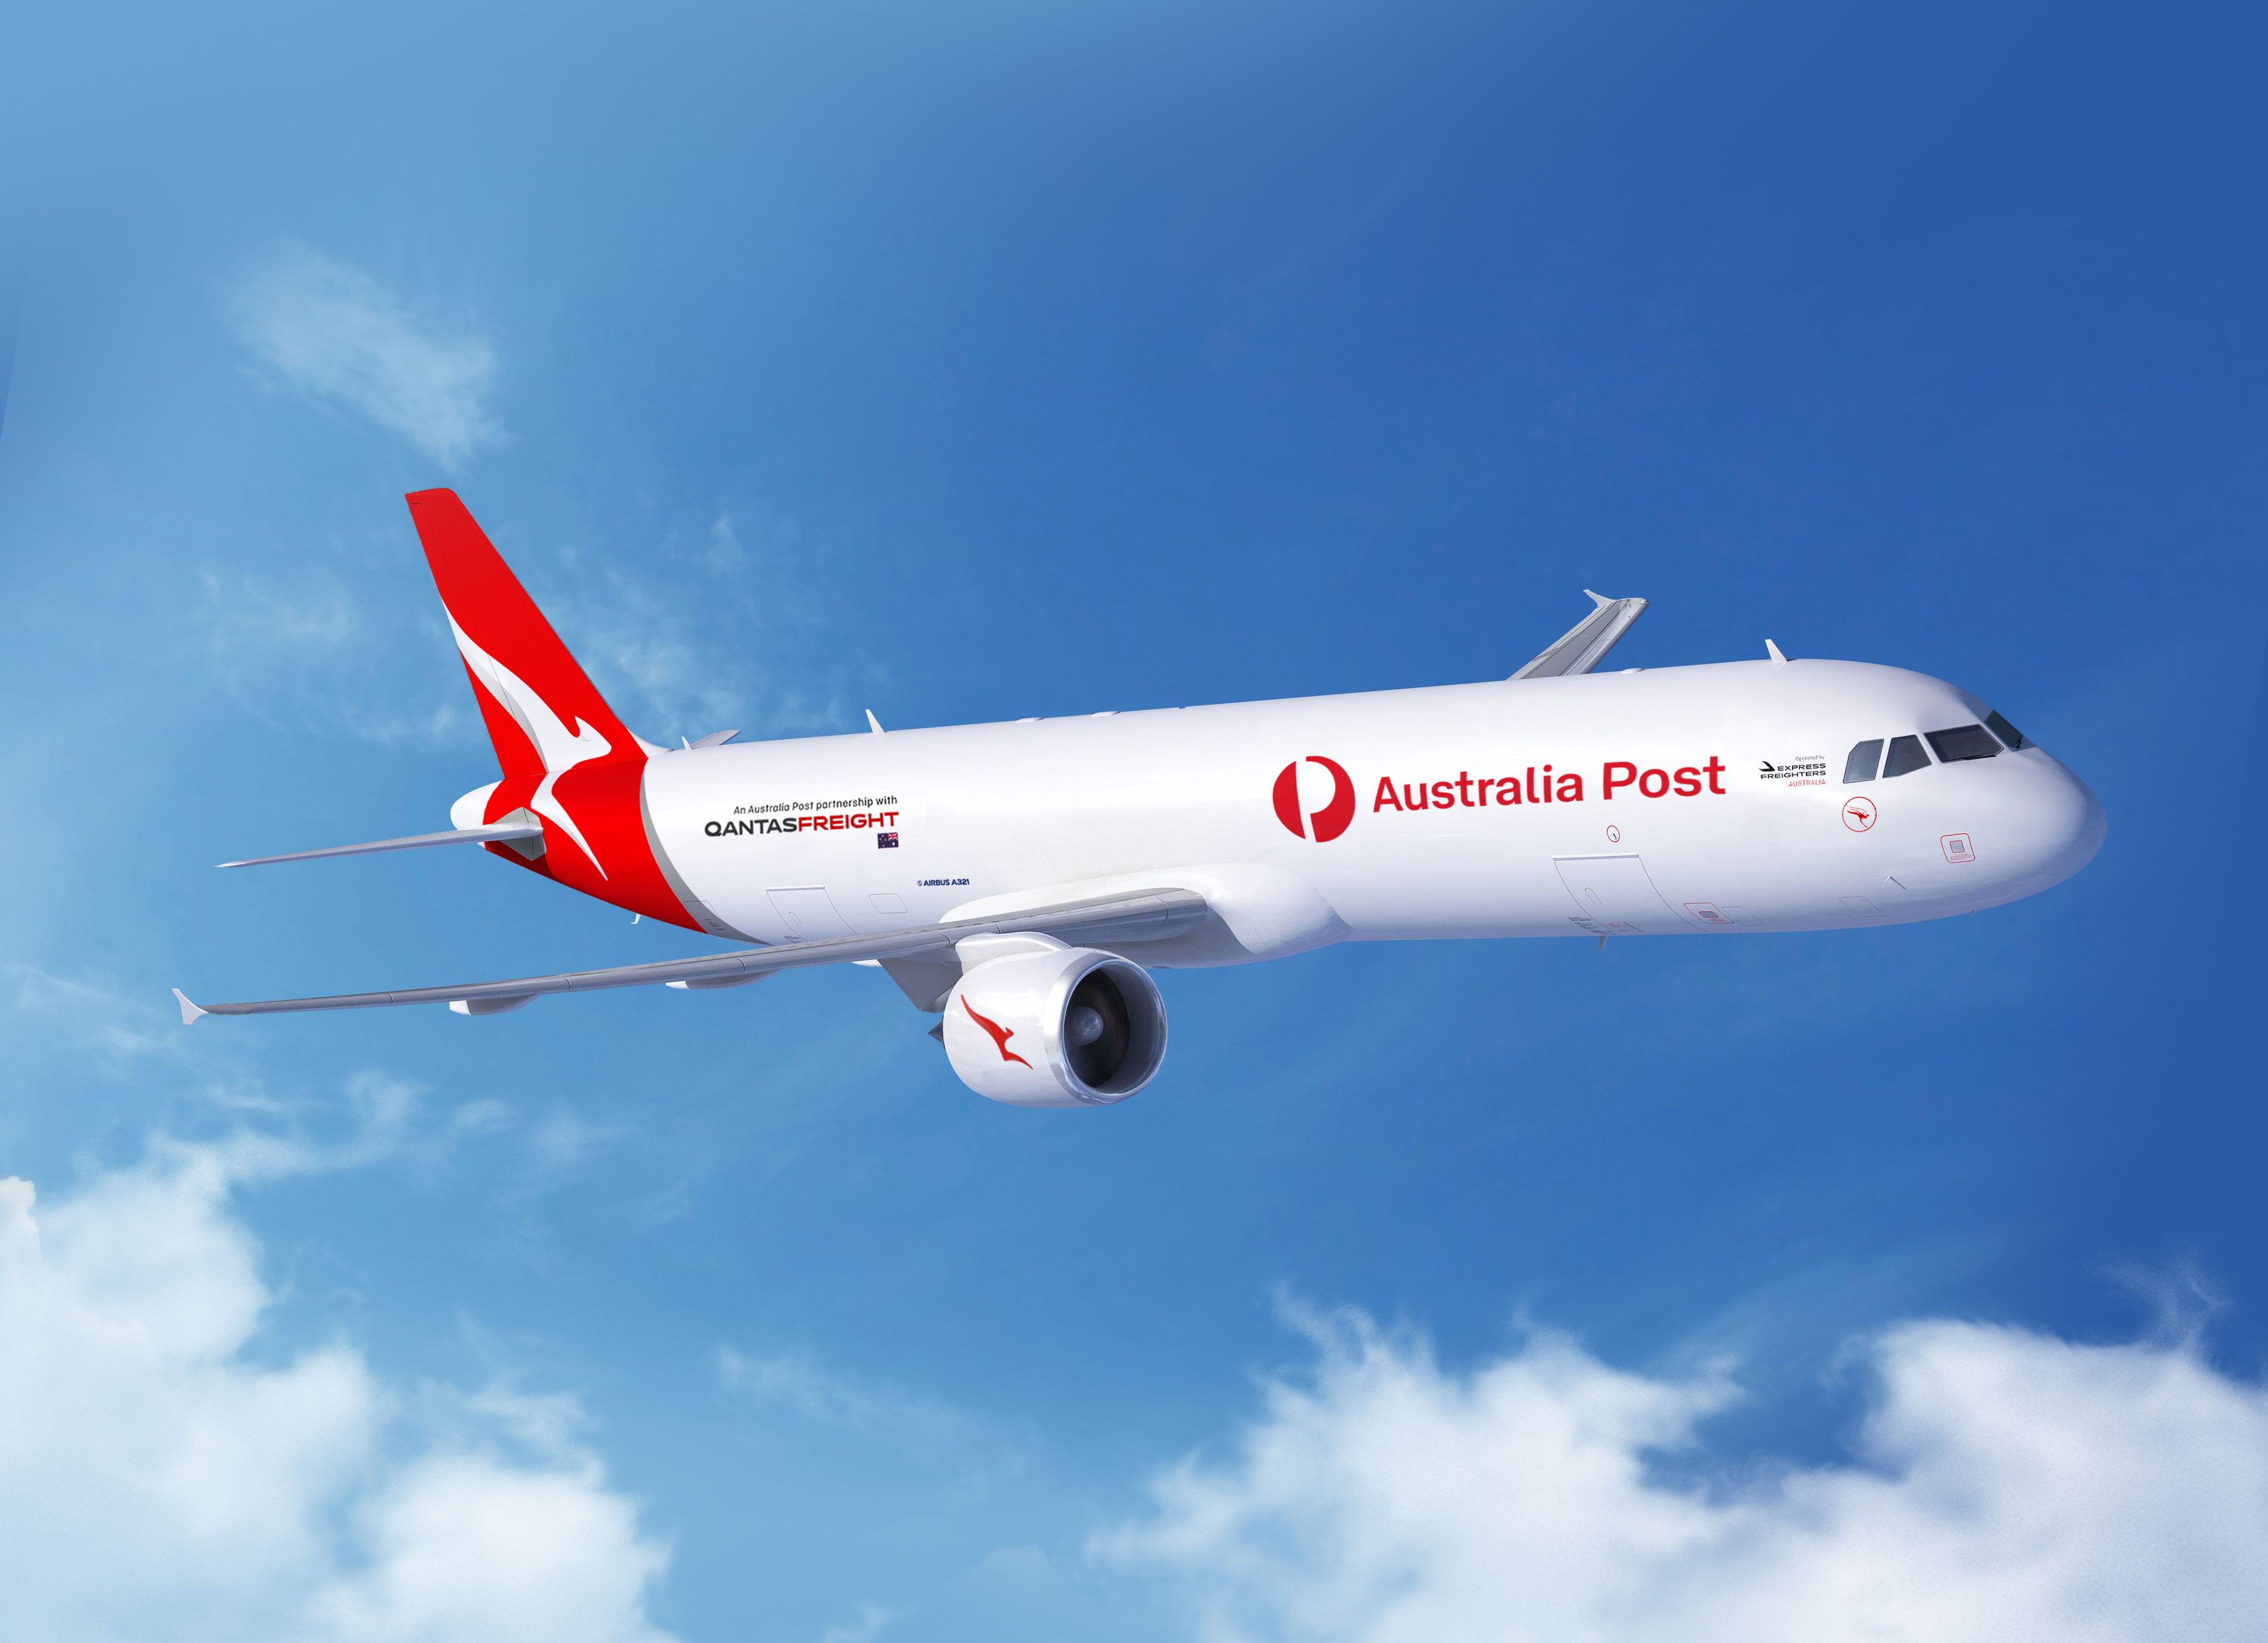 Qantas Freight A321 with Australia Post livery